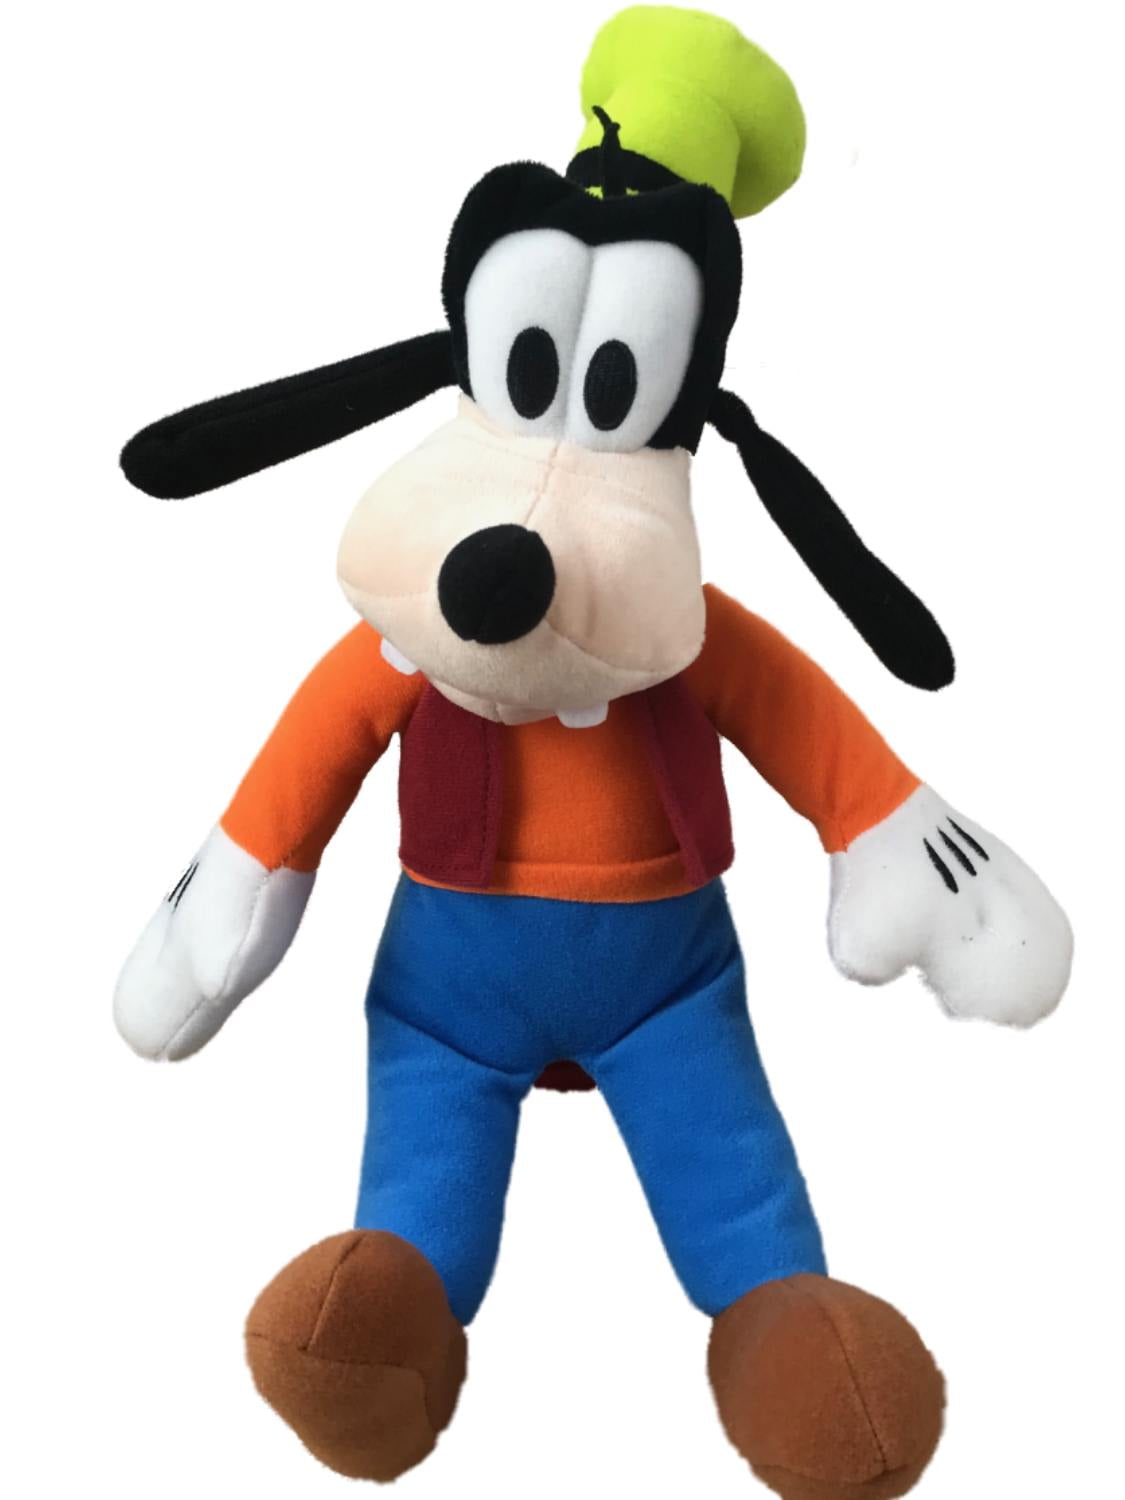 Disney Original plush 10" Basketball Goofy plush 